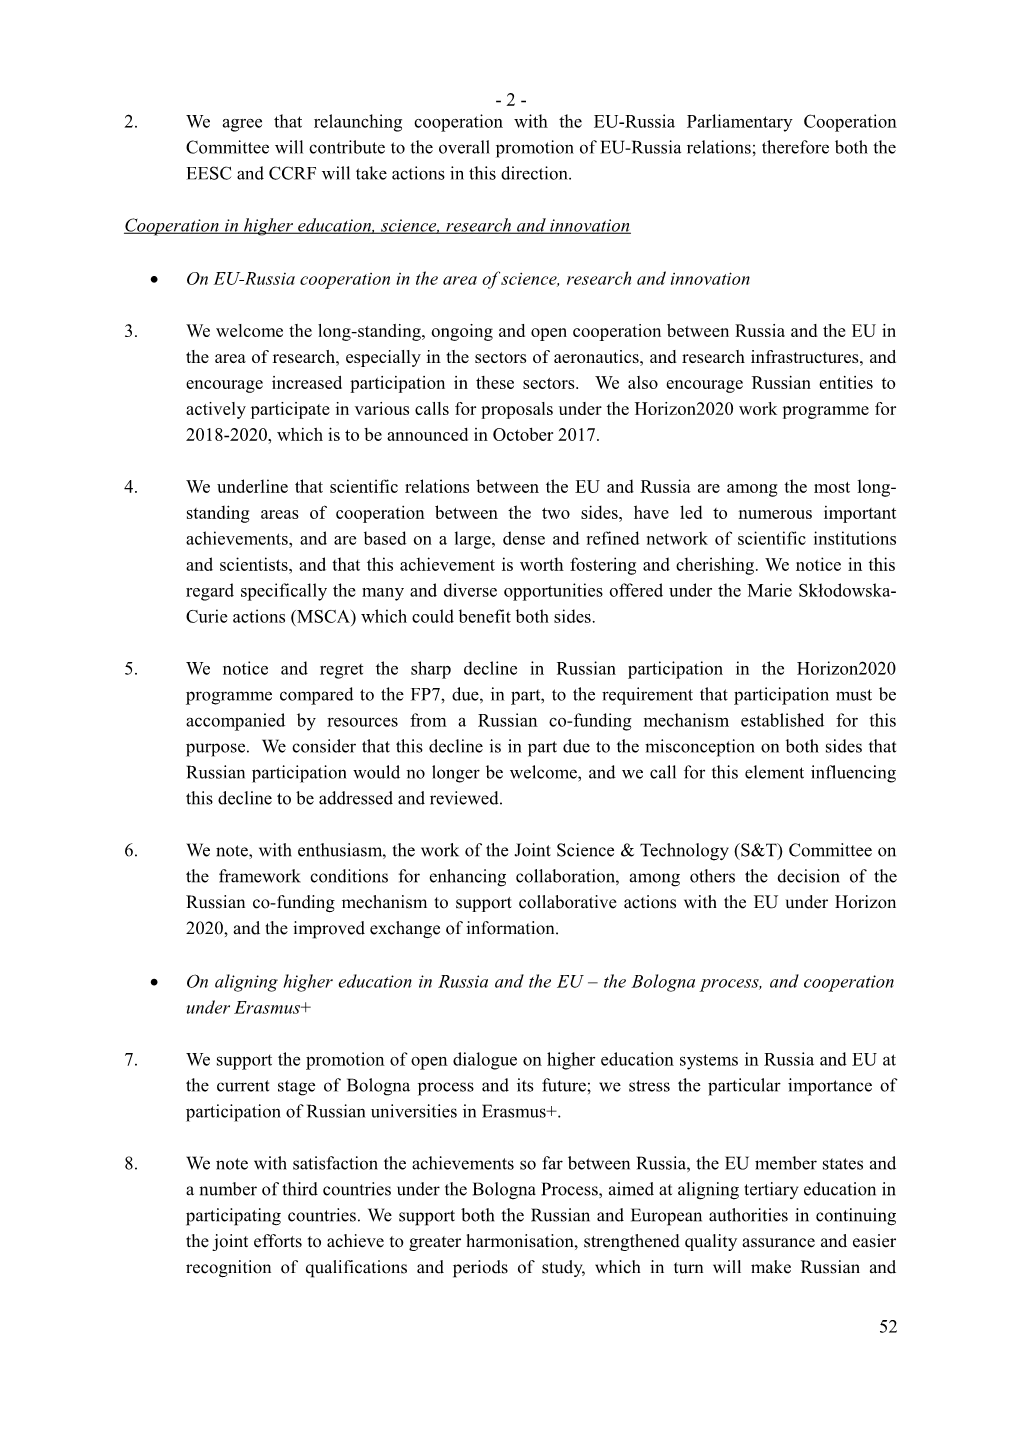 Draft Conclusions for EU-Russia Seminar